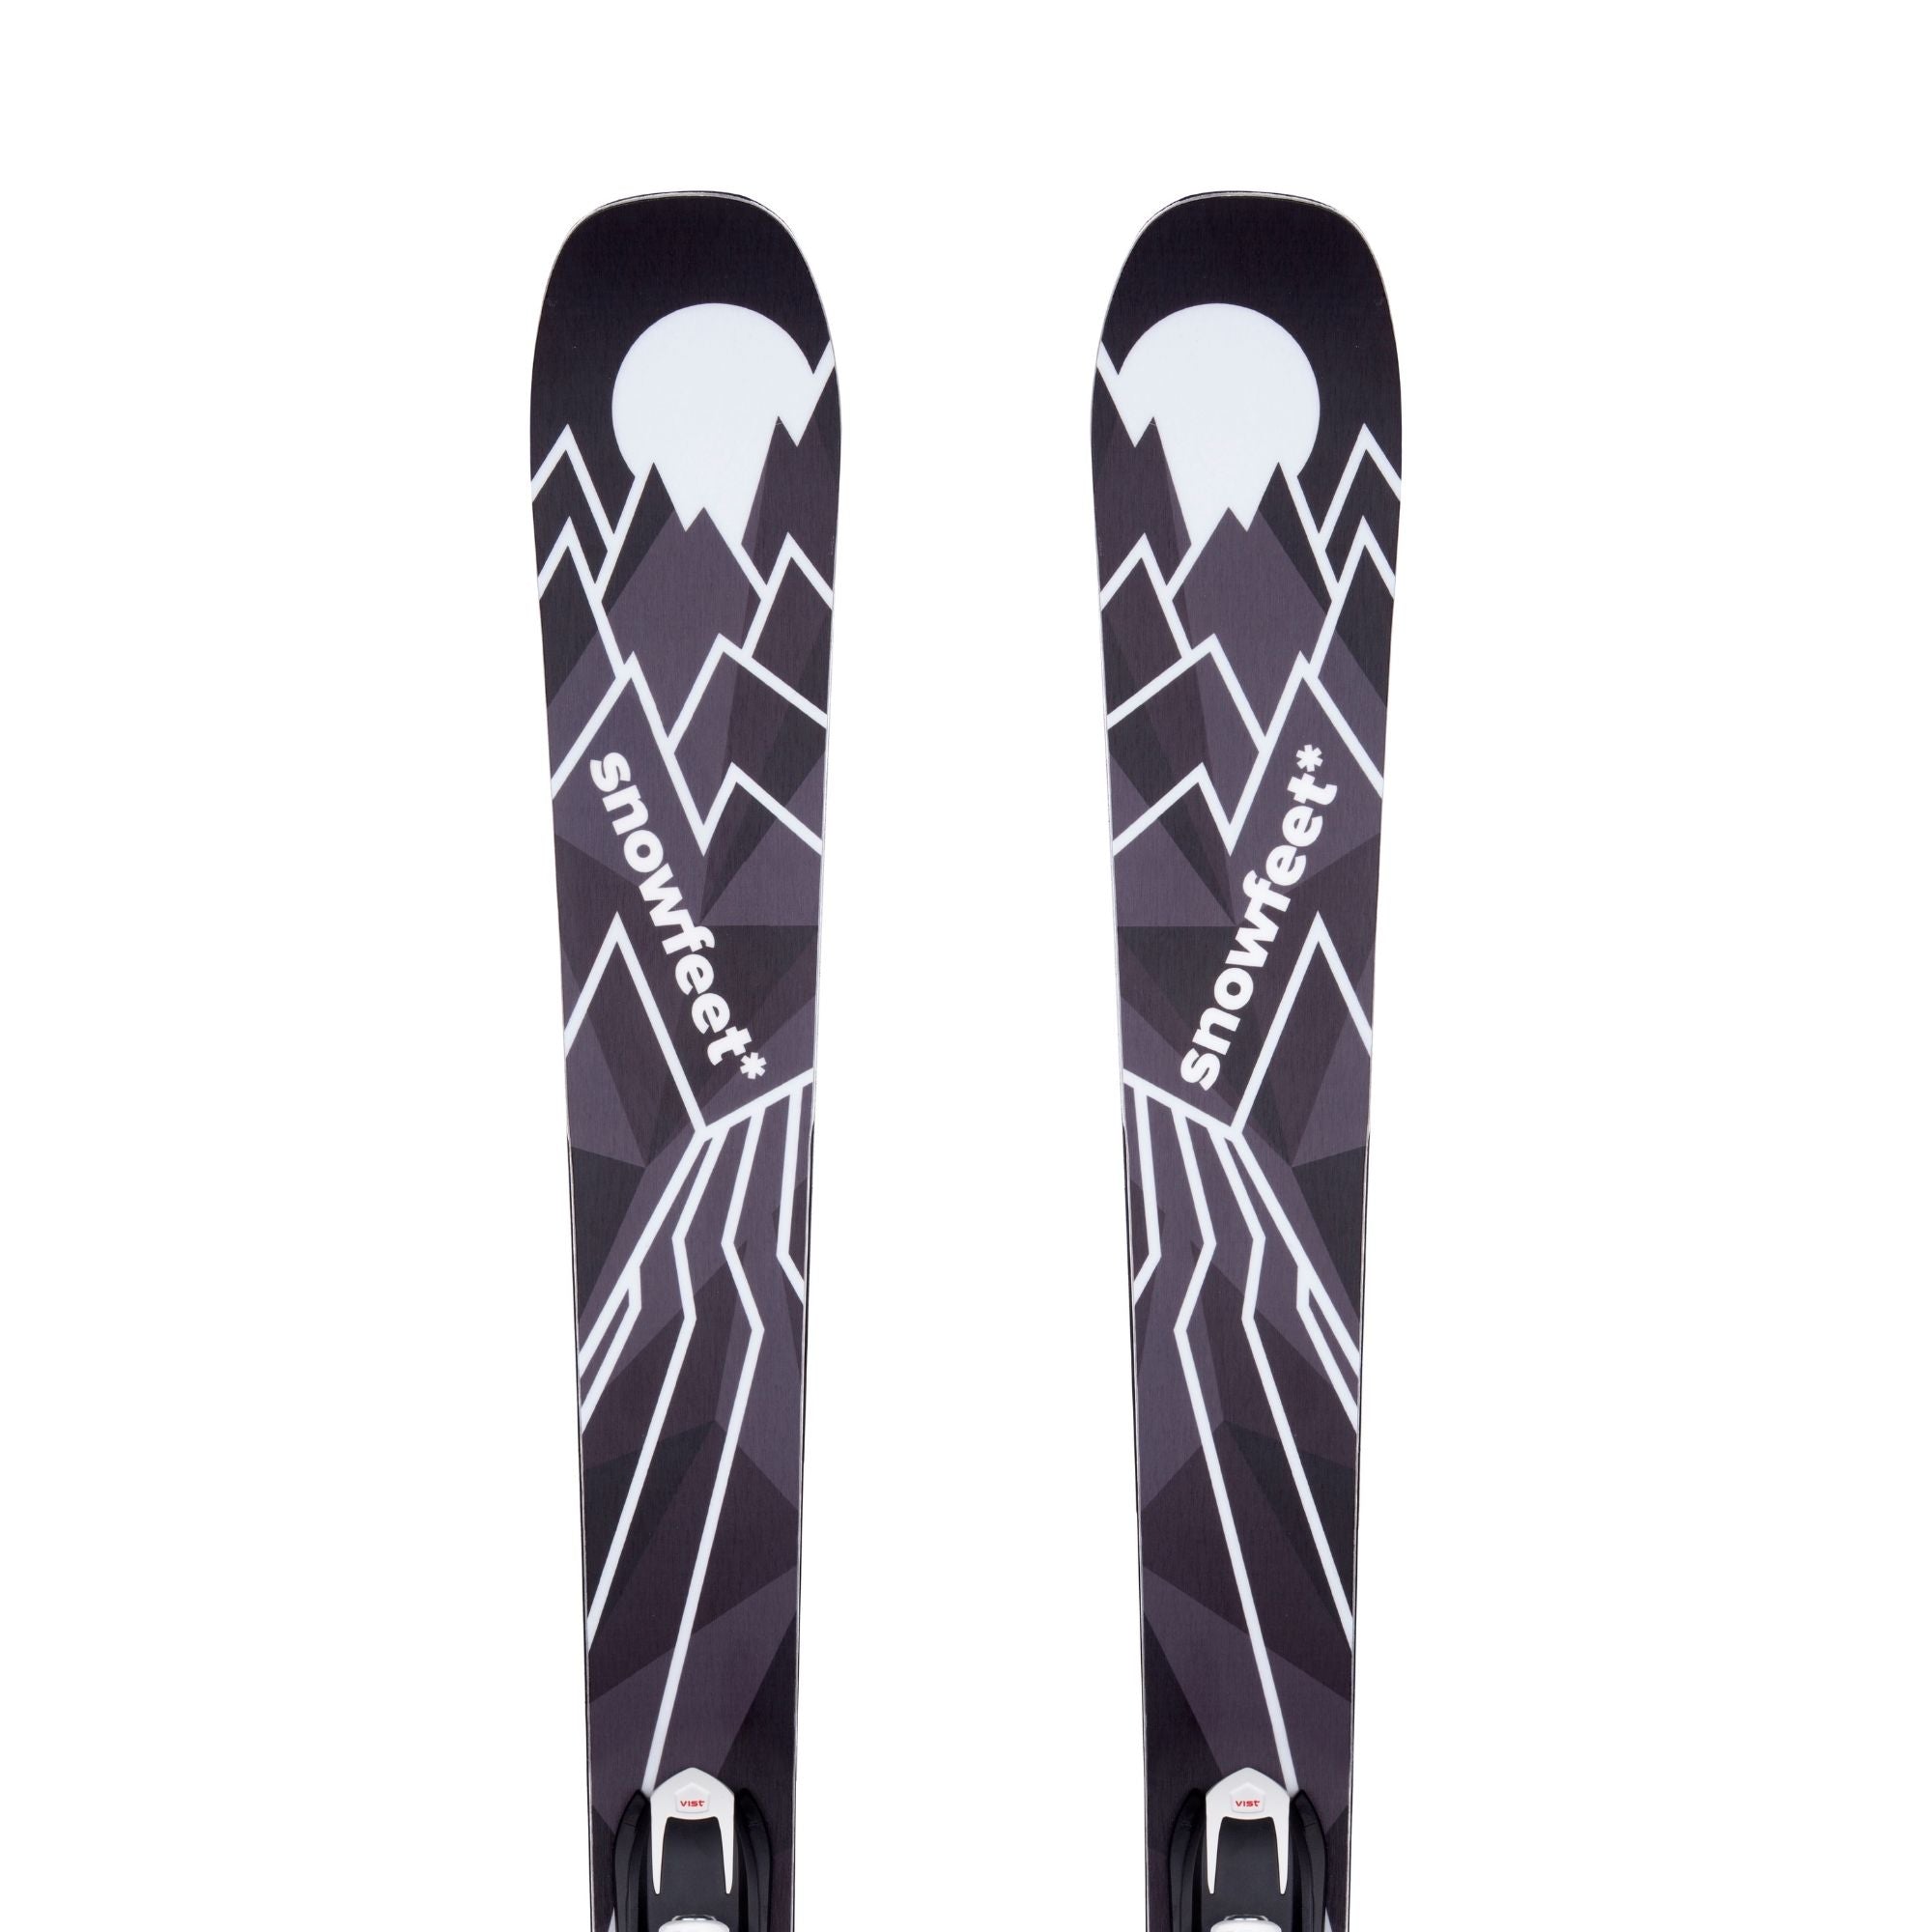 Snowfeet Skis 156 cm | Limited Edition - snowfeet*